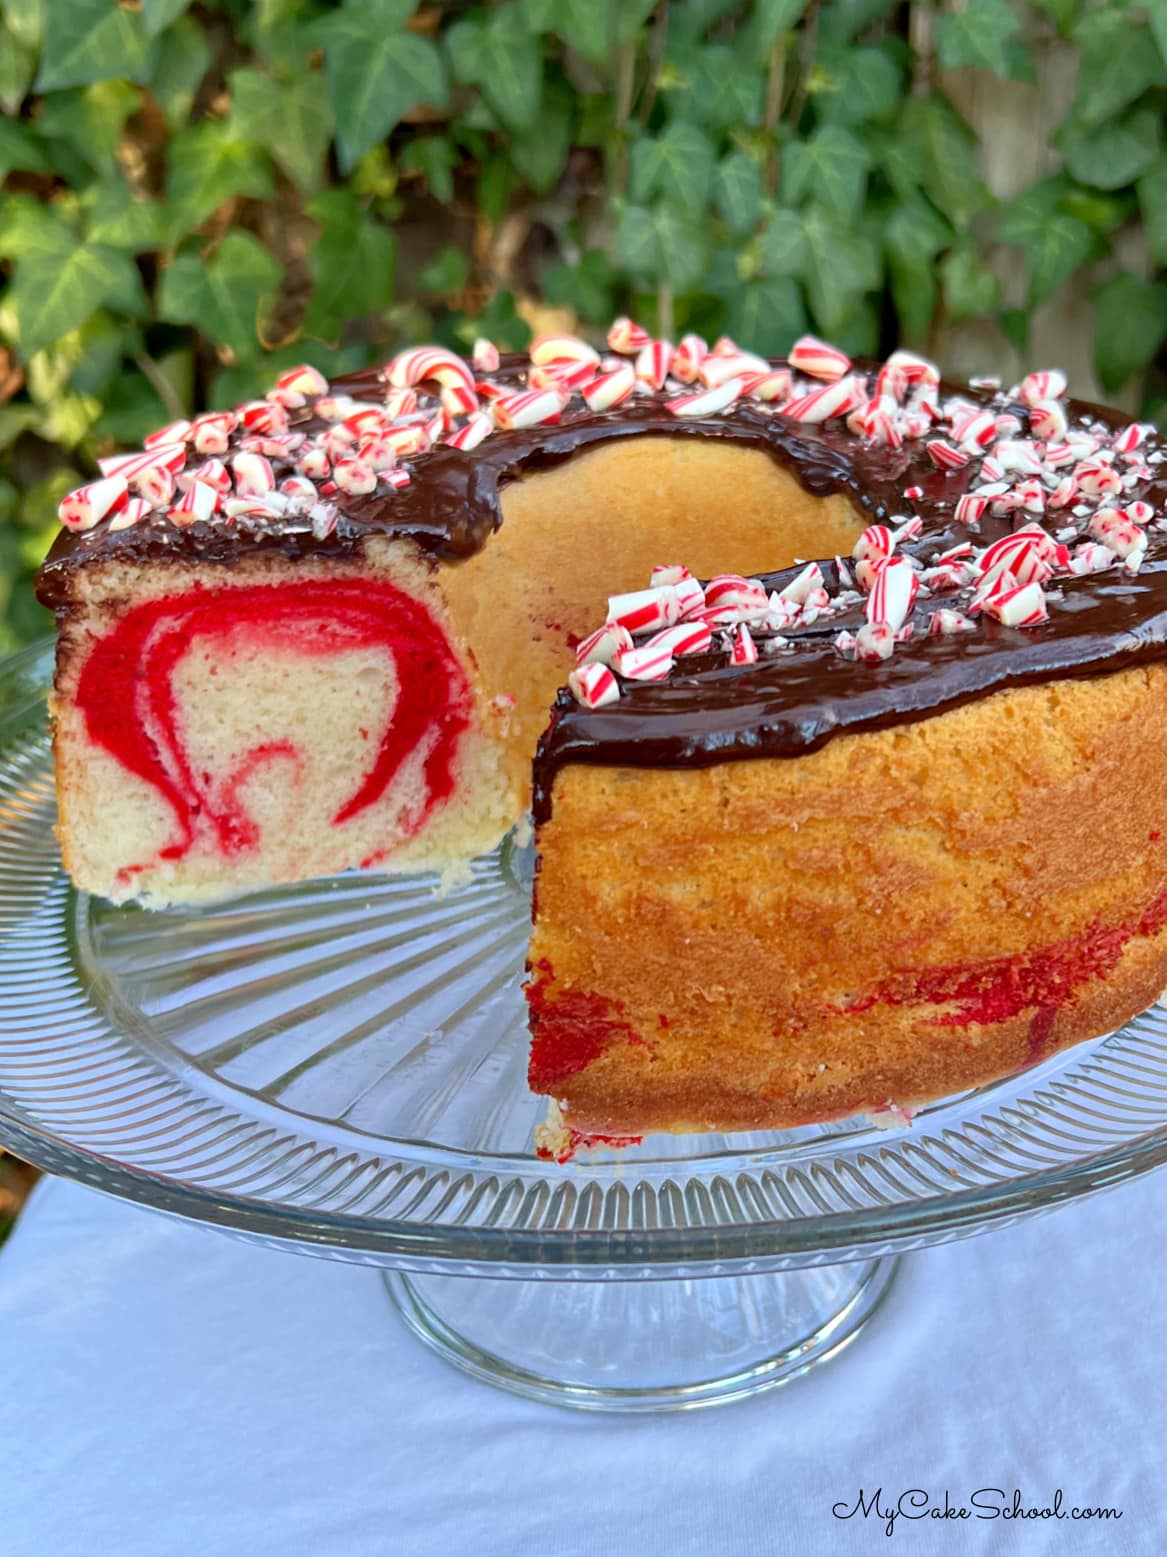 Sliced Peppermint Bundt Cake on a pedestal with chocolate glaze.